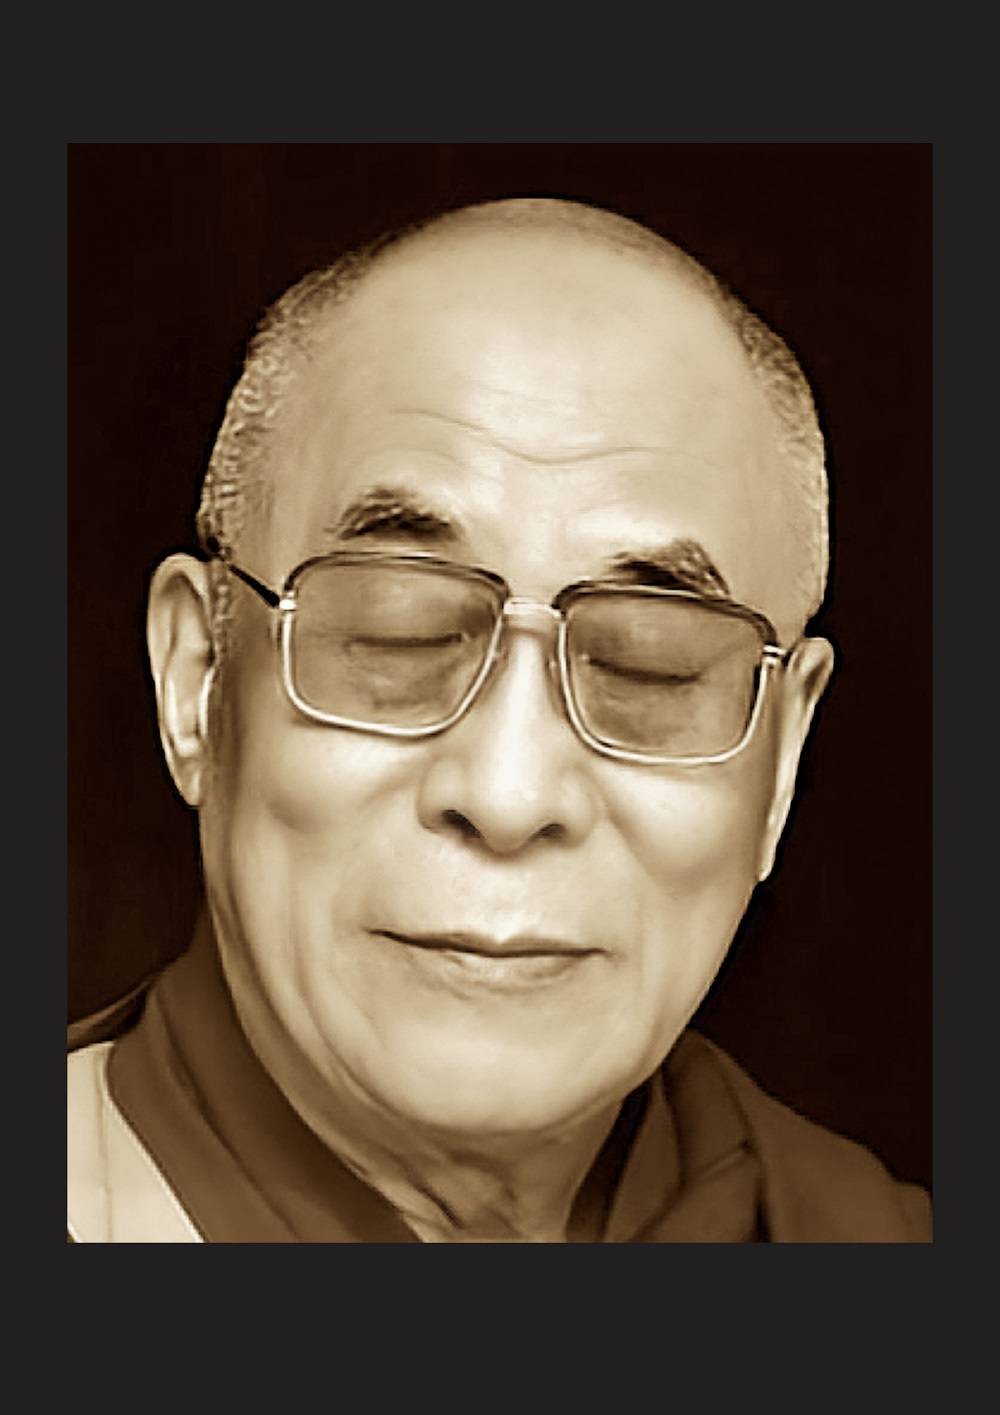 His Holiness Dalai Lama by Jon Carapiet/AI